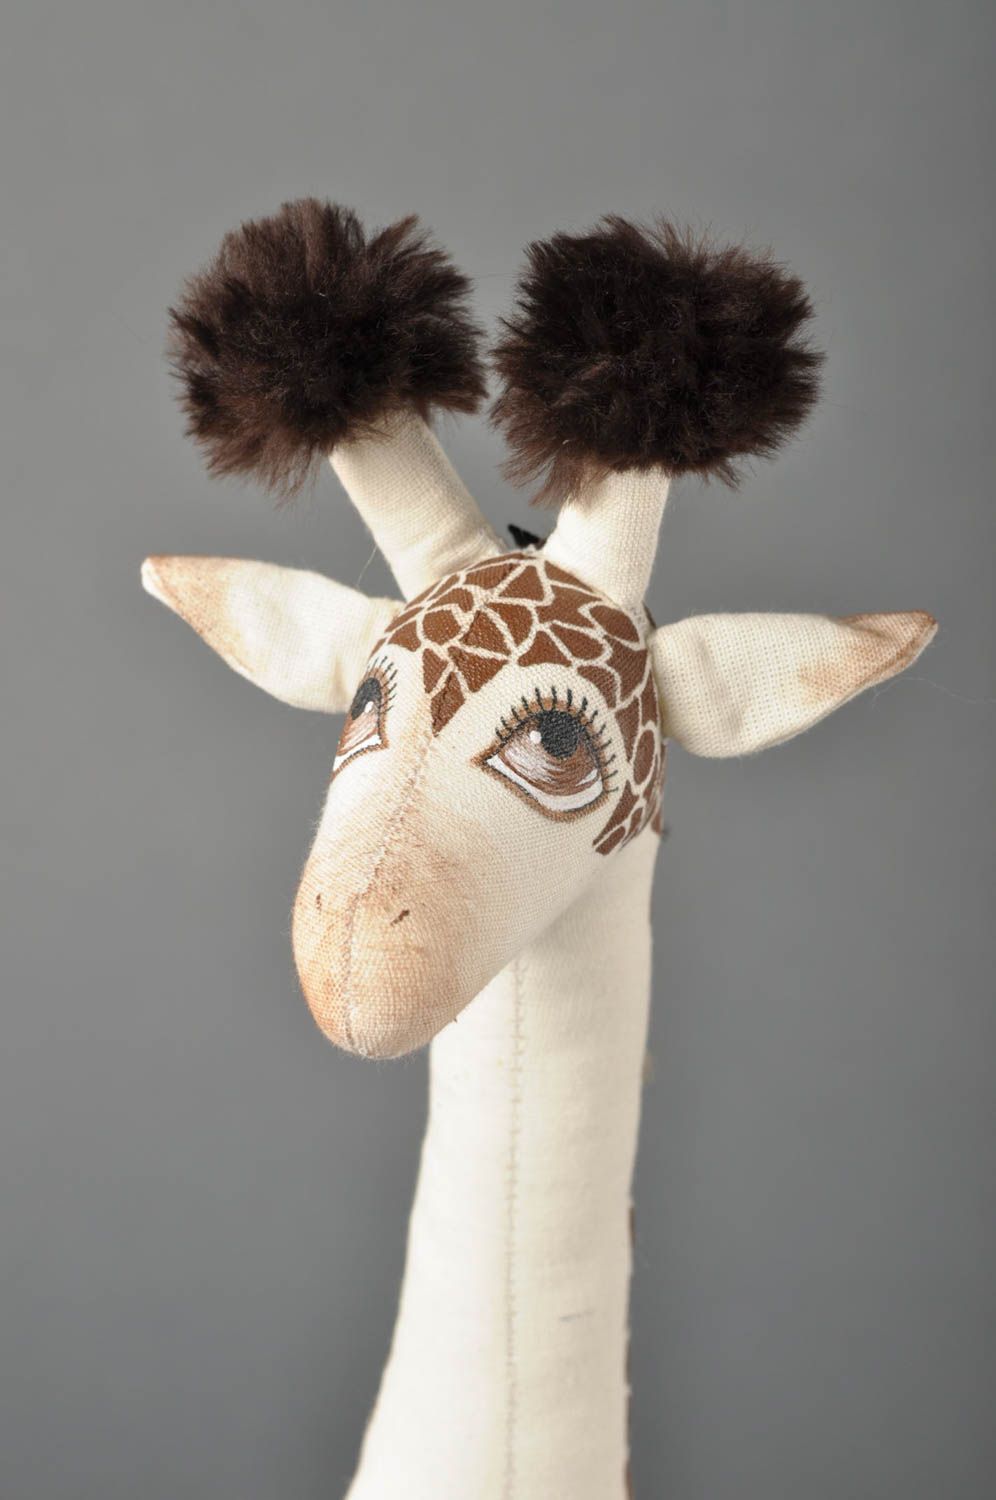 Handmade soft toy animal toy stuffed animals nursery decor gifts for kids photo 2